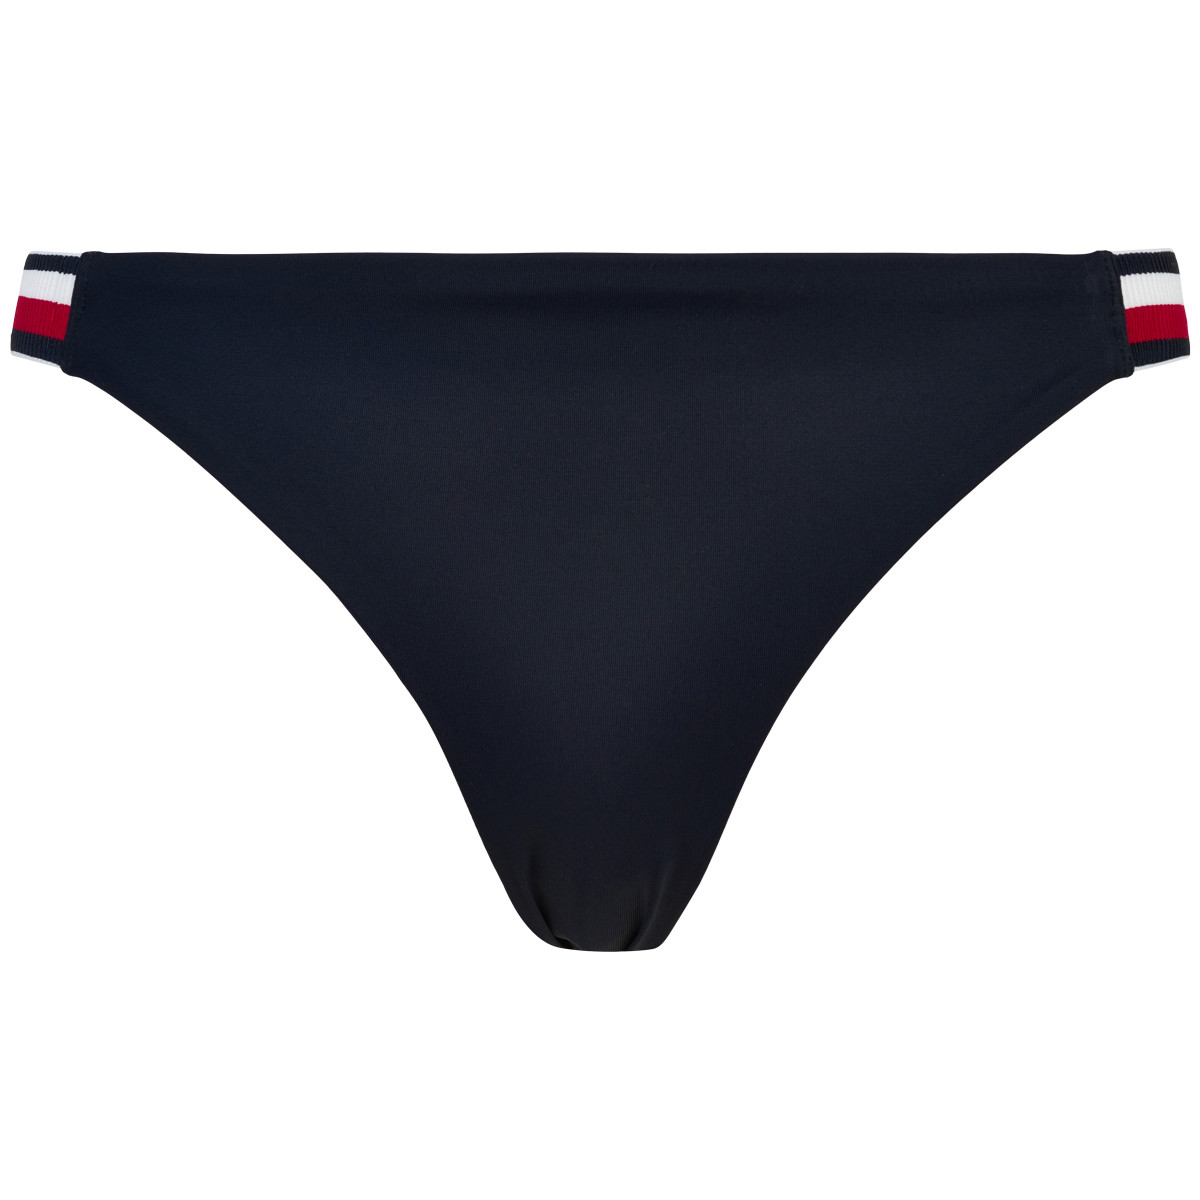 2: Tommy Hilfiger Bikini Mini, Størrelse: S, Farve: Sort, Dame